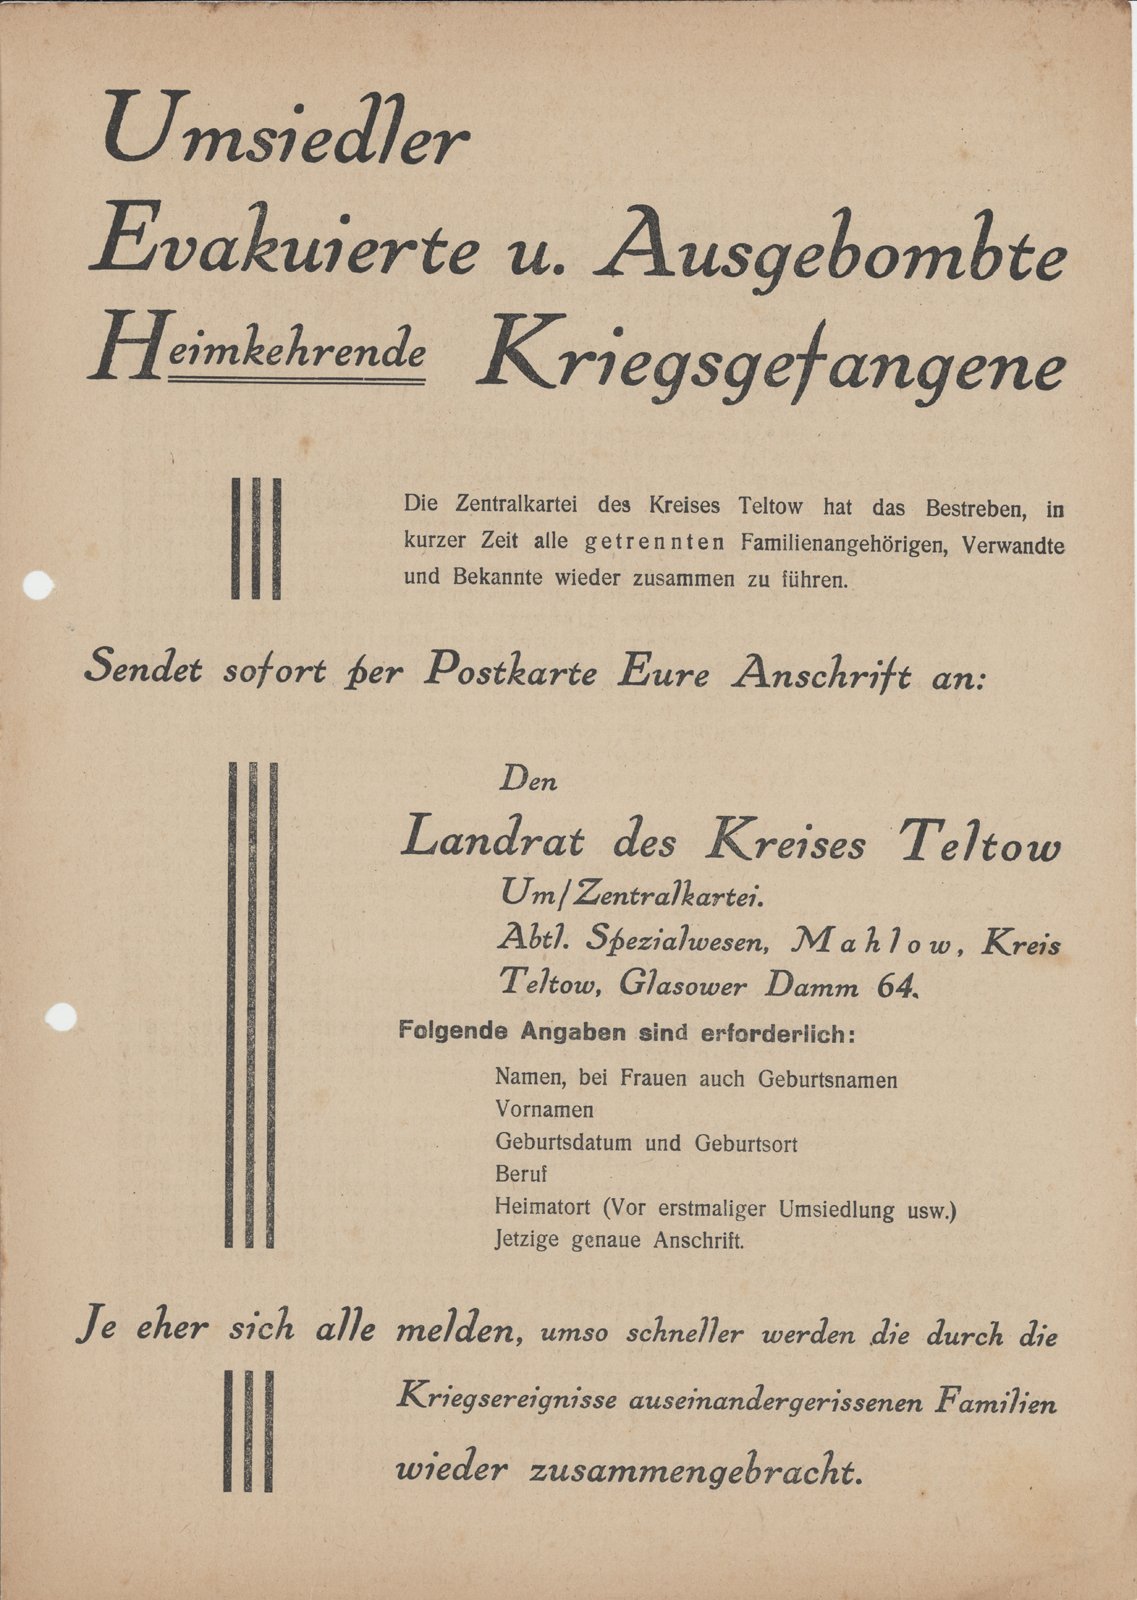 Flyer, Umsiedler 1946 (Heimatverein "Alter Krug" Zossen e.V. CC BY-NC-SA)